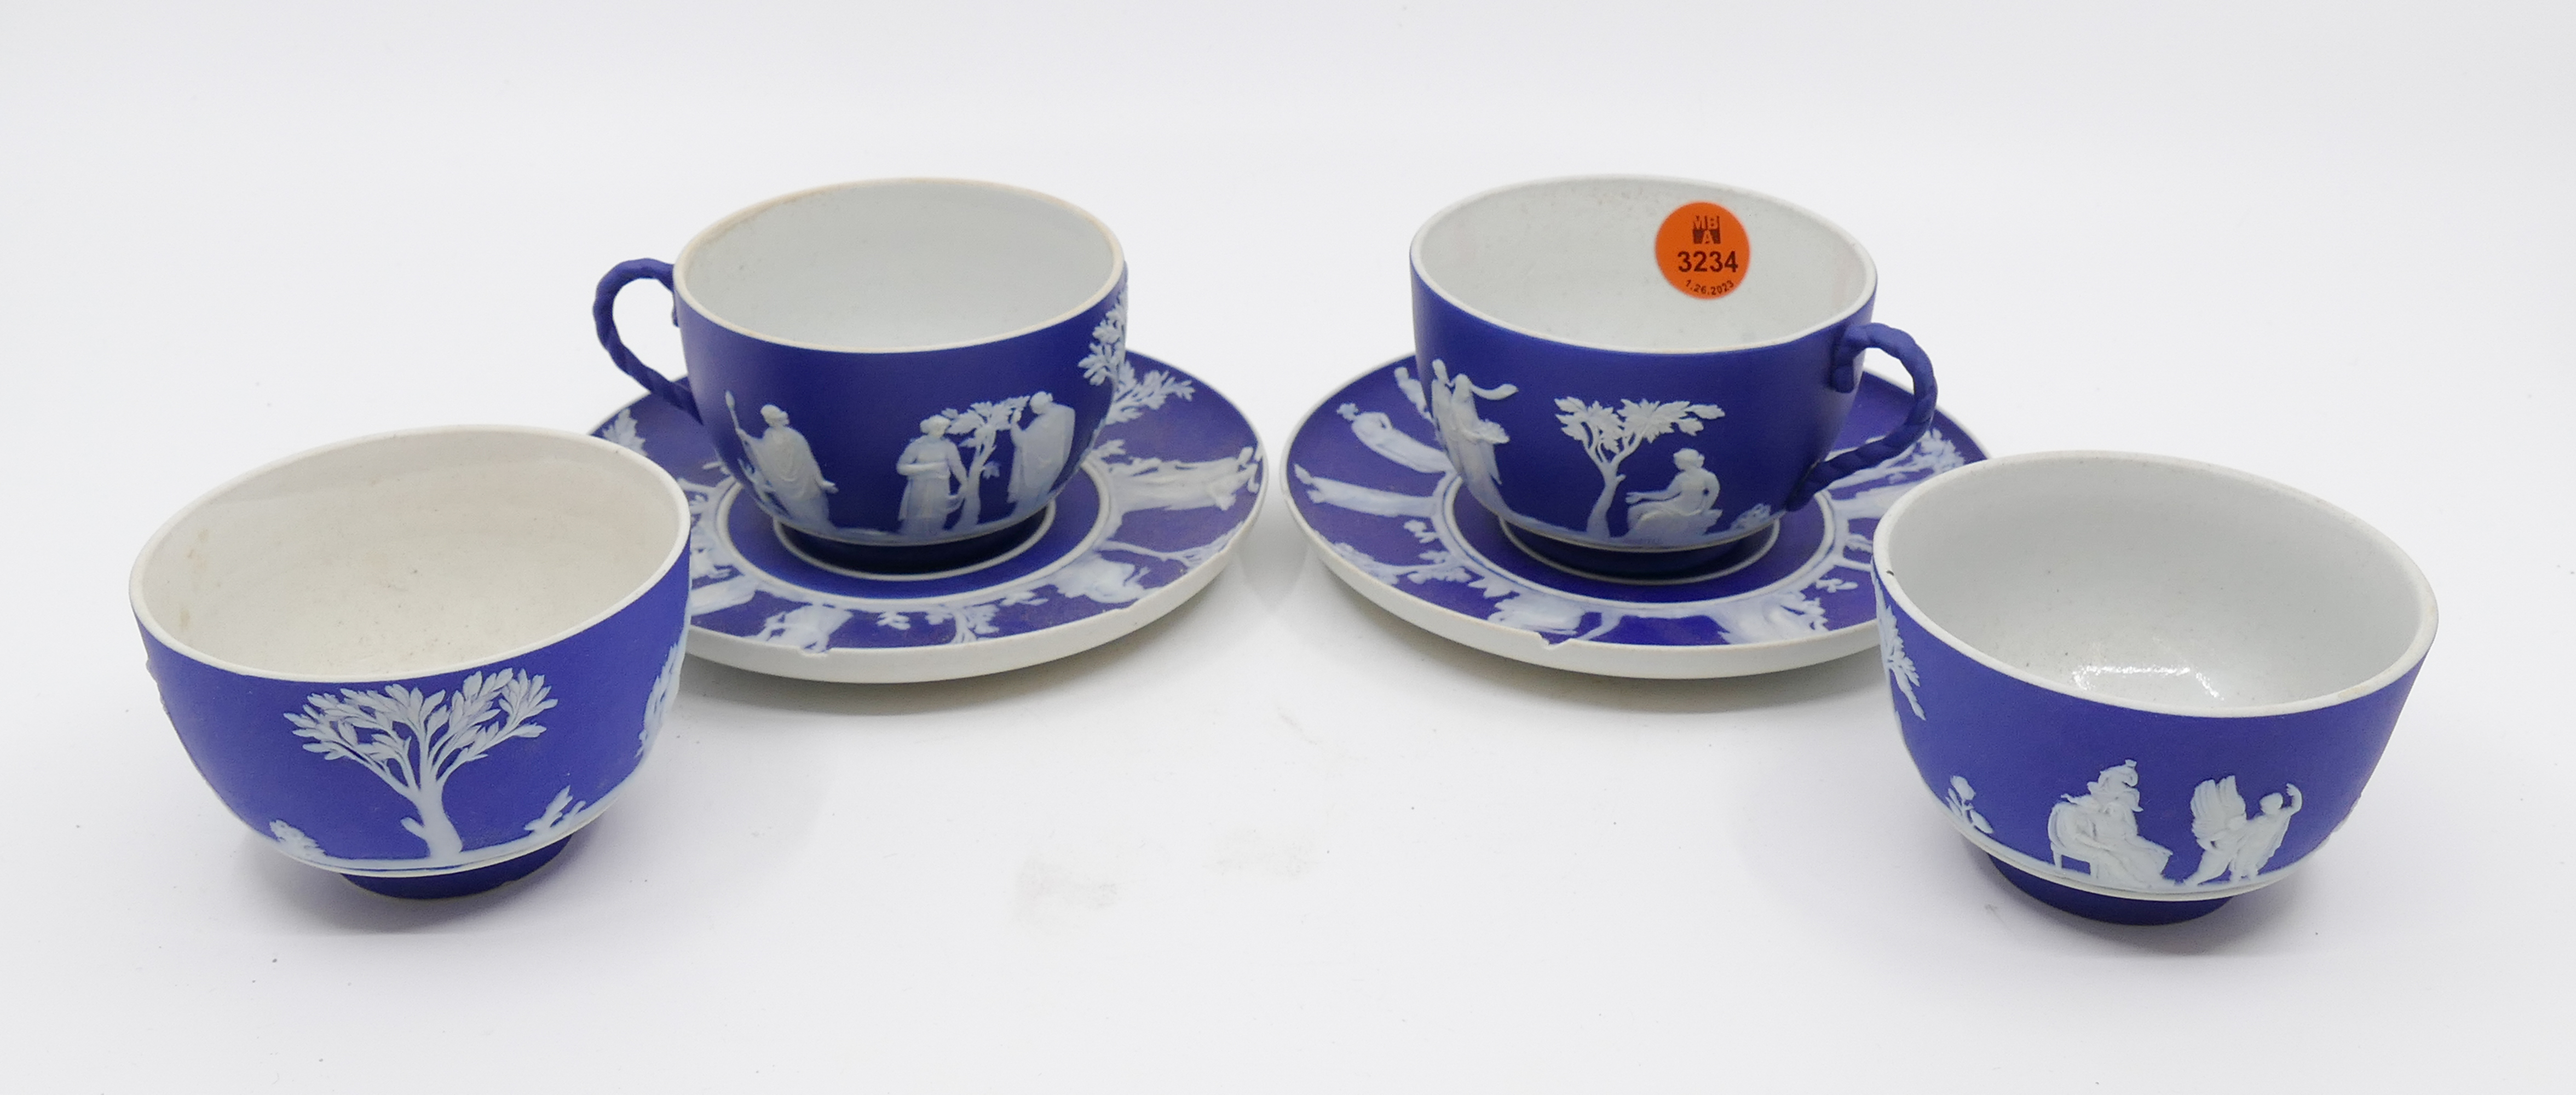 6pc Wedgwood Jasperware Blue Teacups  2dd956